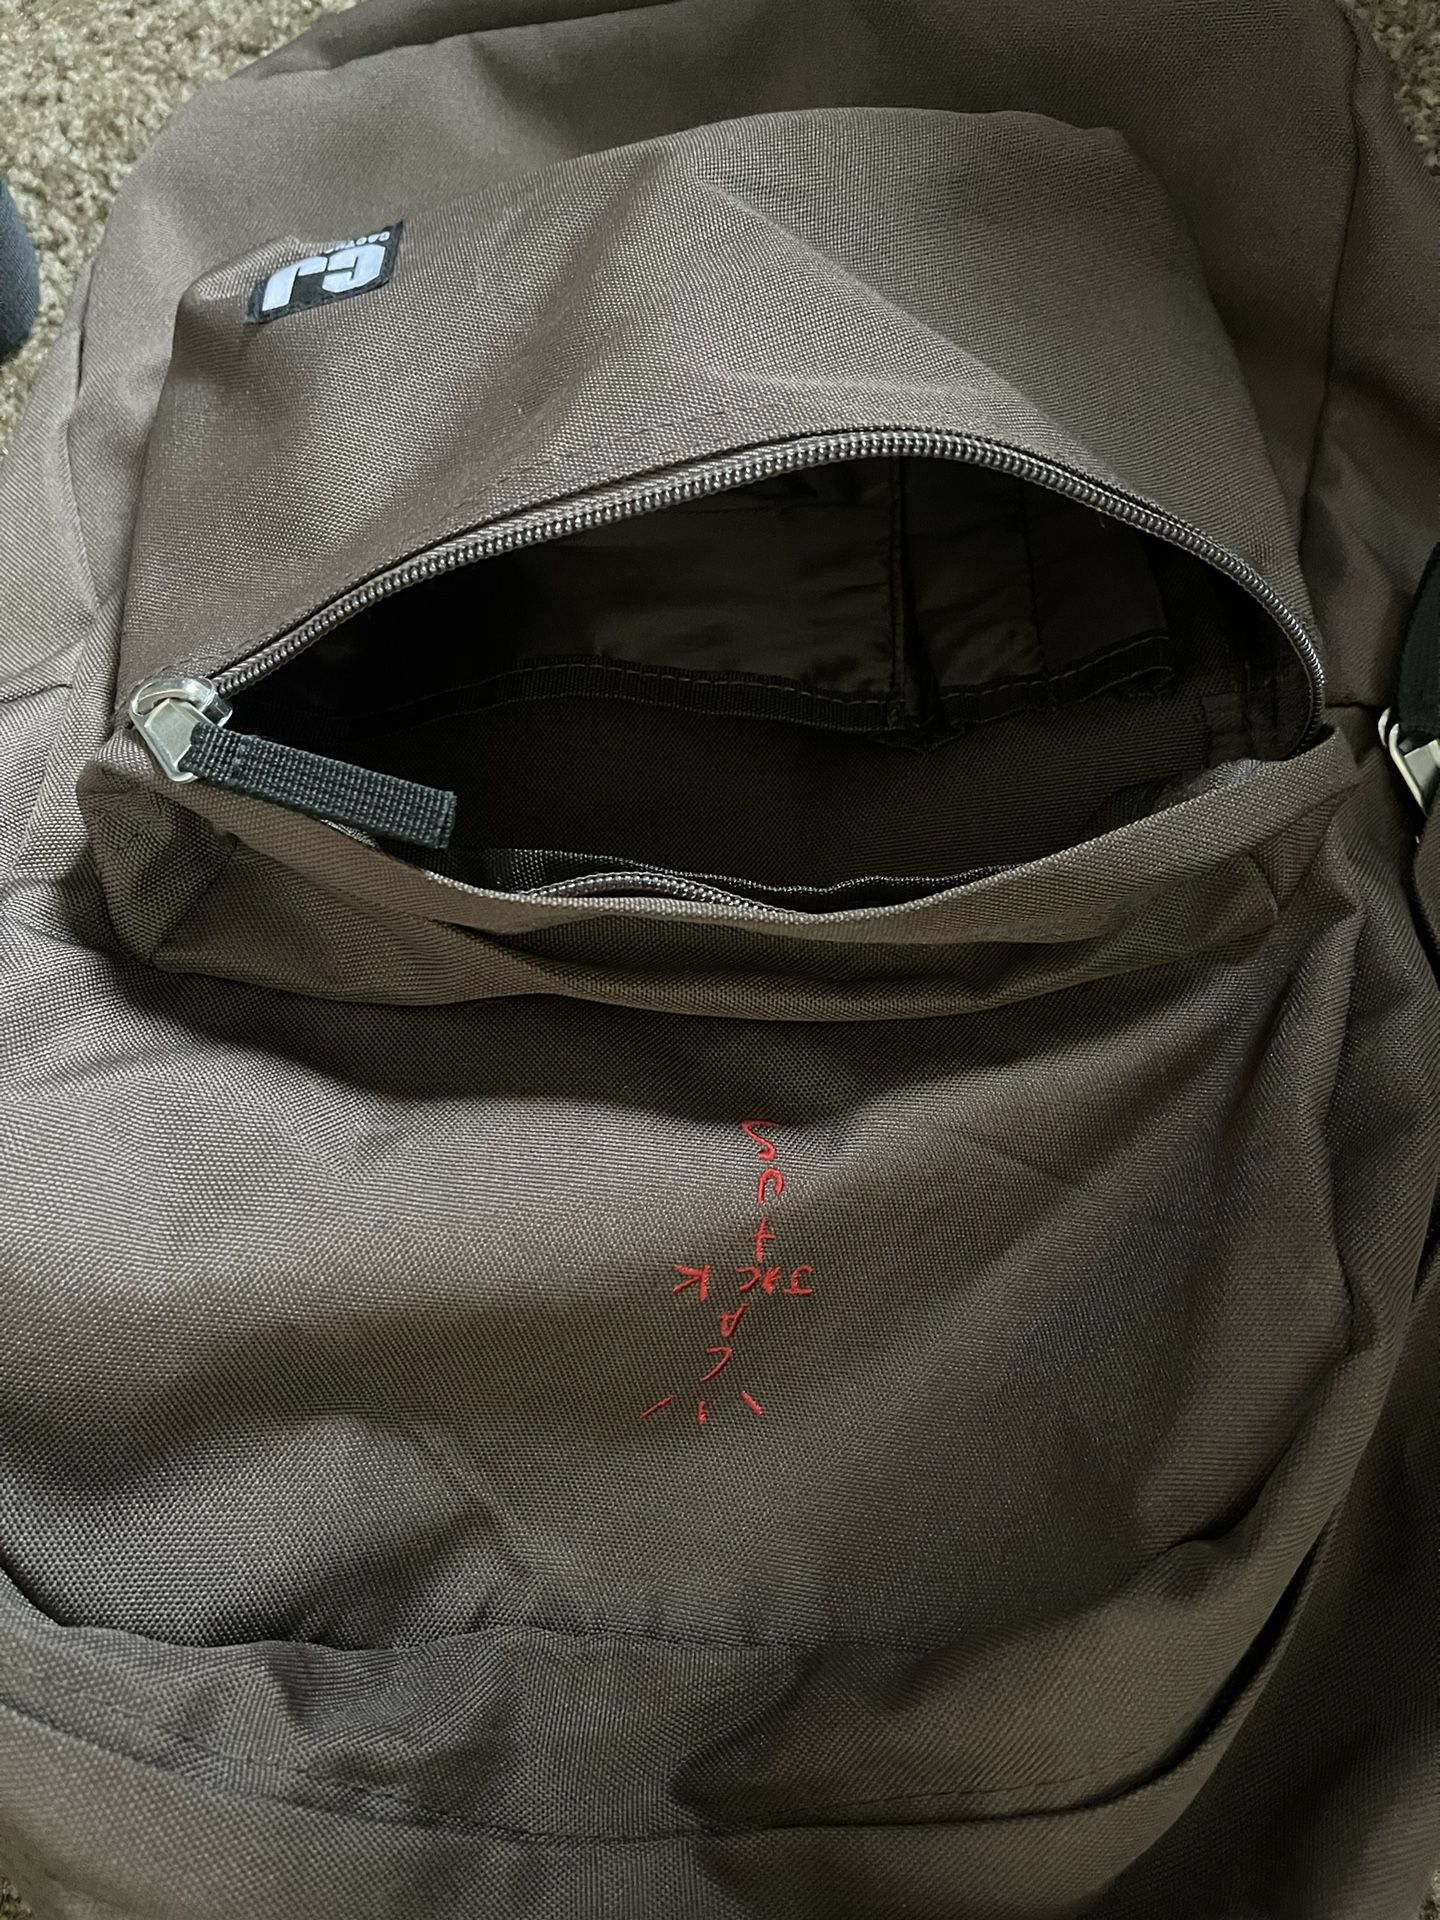 Travis Scott Cactus Jack backpack in stock